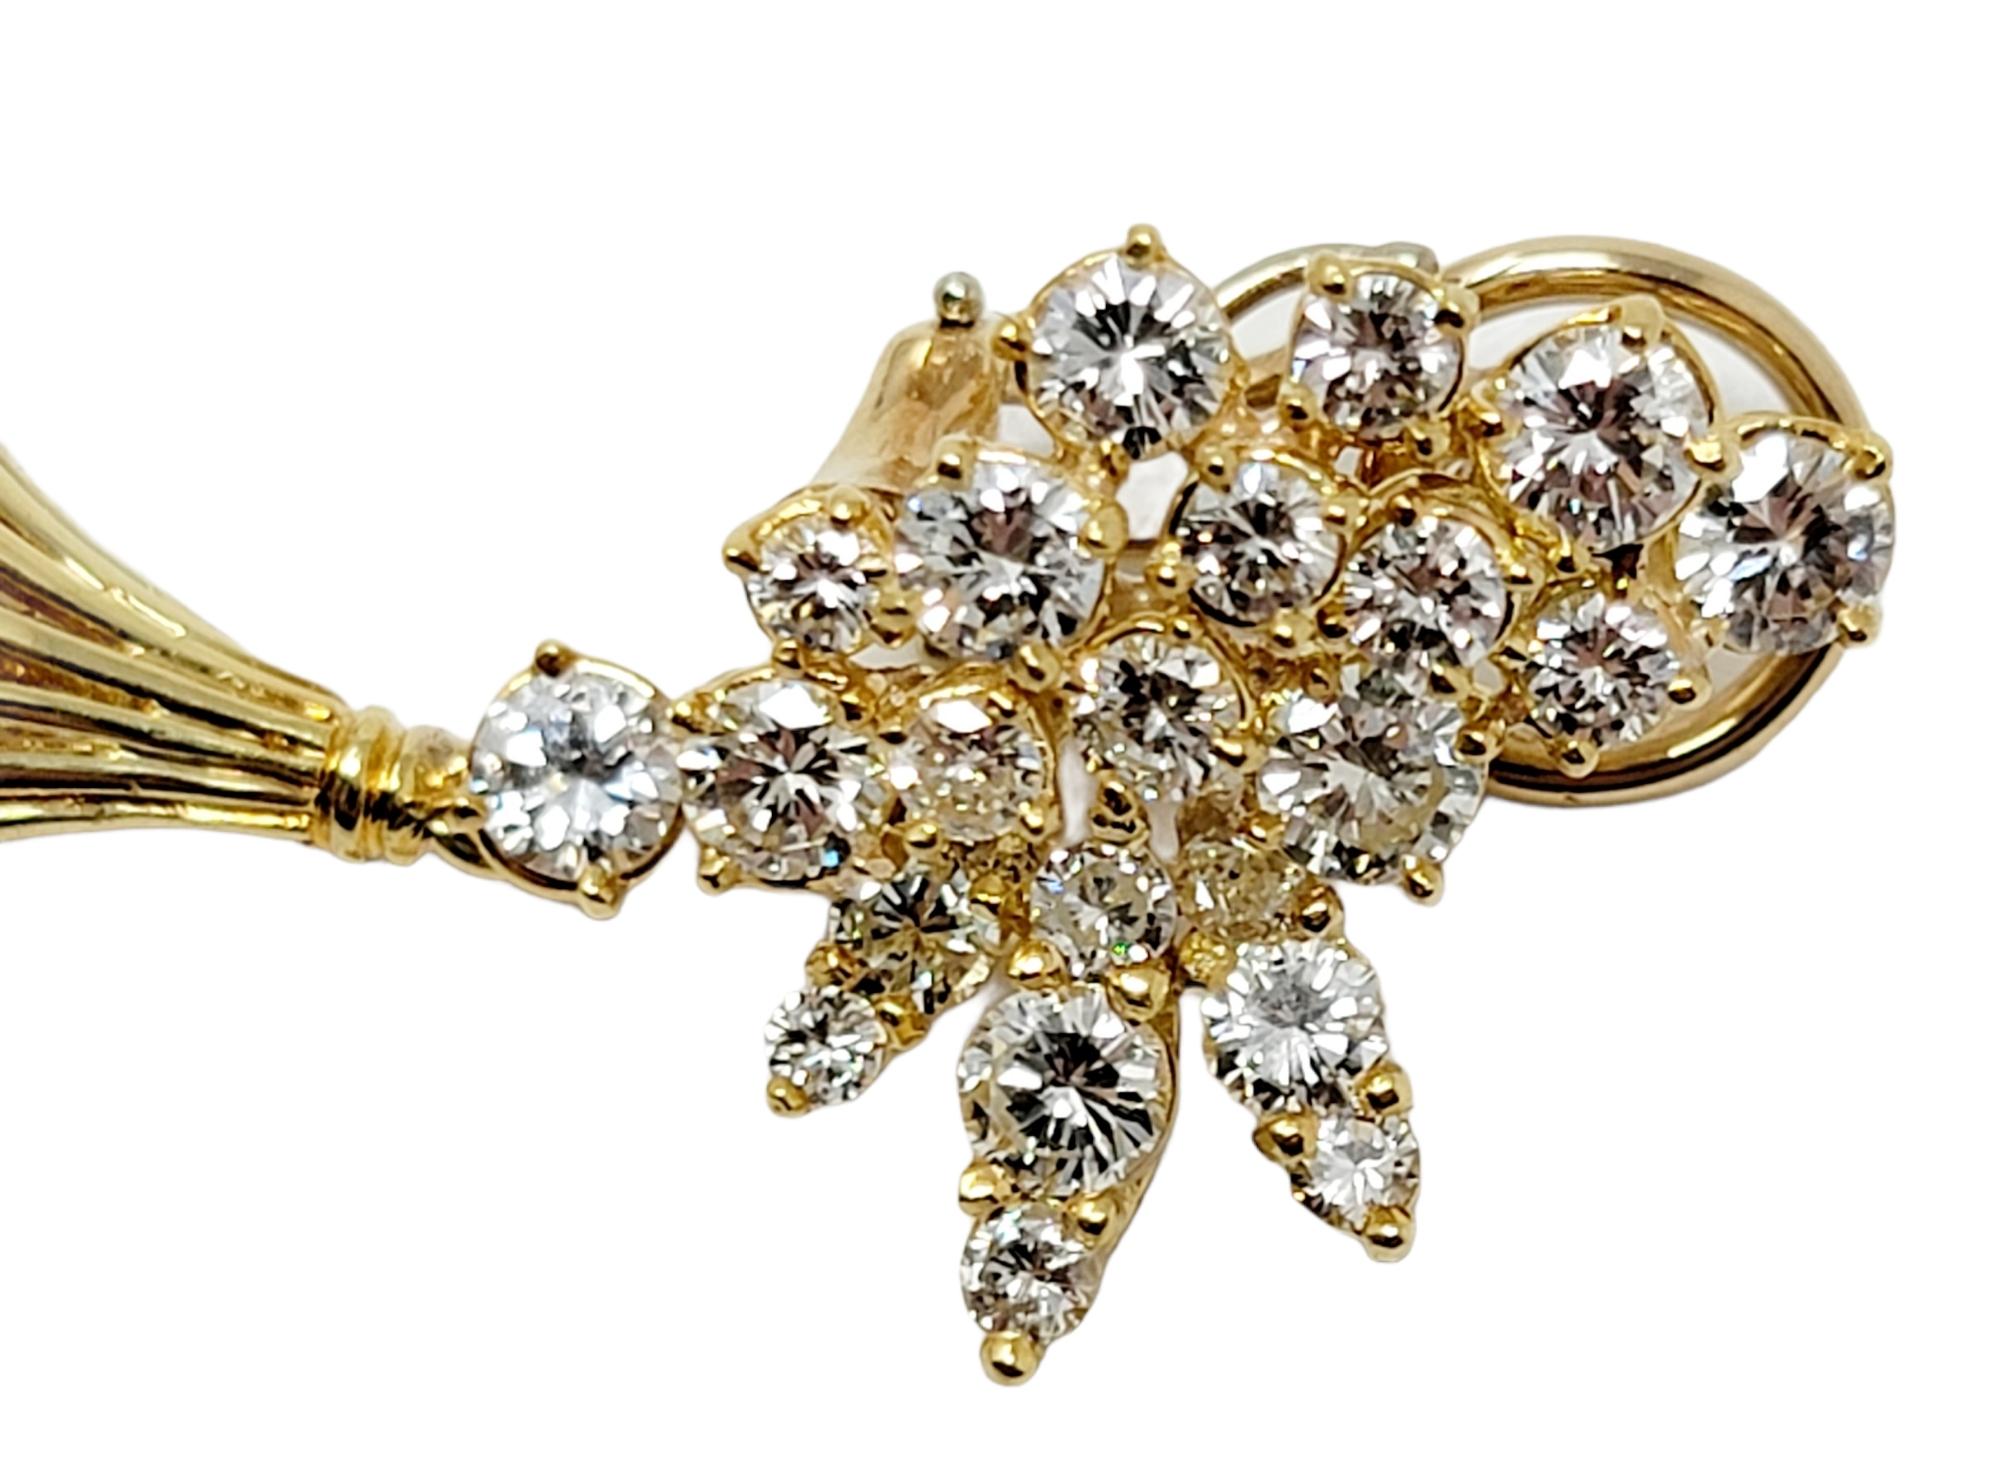 Dangling Chandelier Earrings in 18 Karat Gold 11.59 Carats Total Round Diamonds For Sale 3